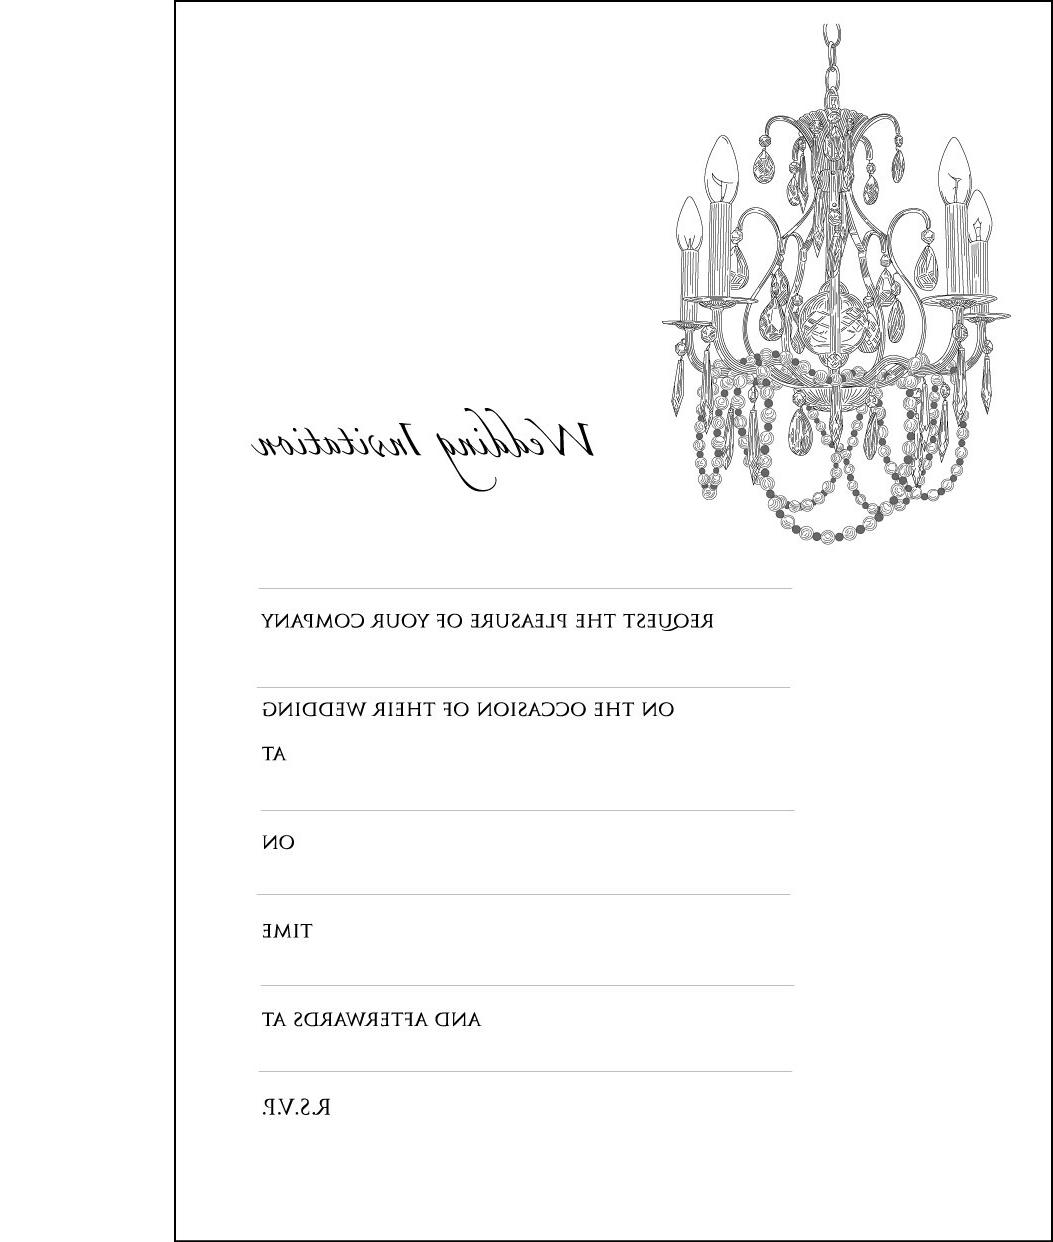 Chandelier Wedding invitations